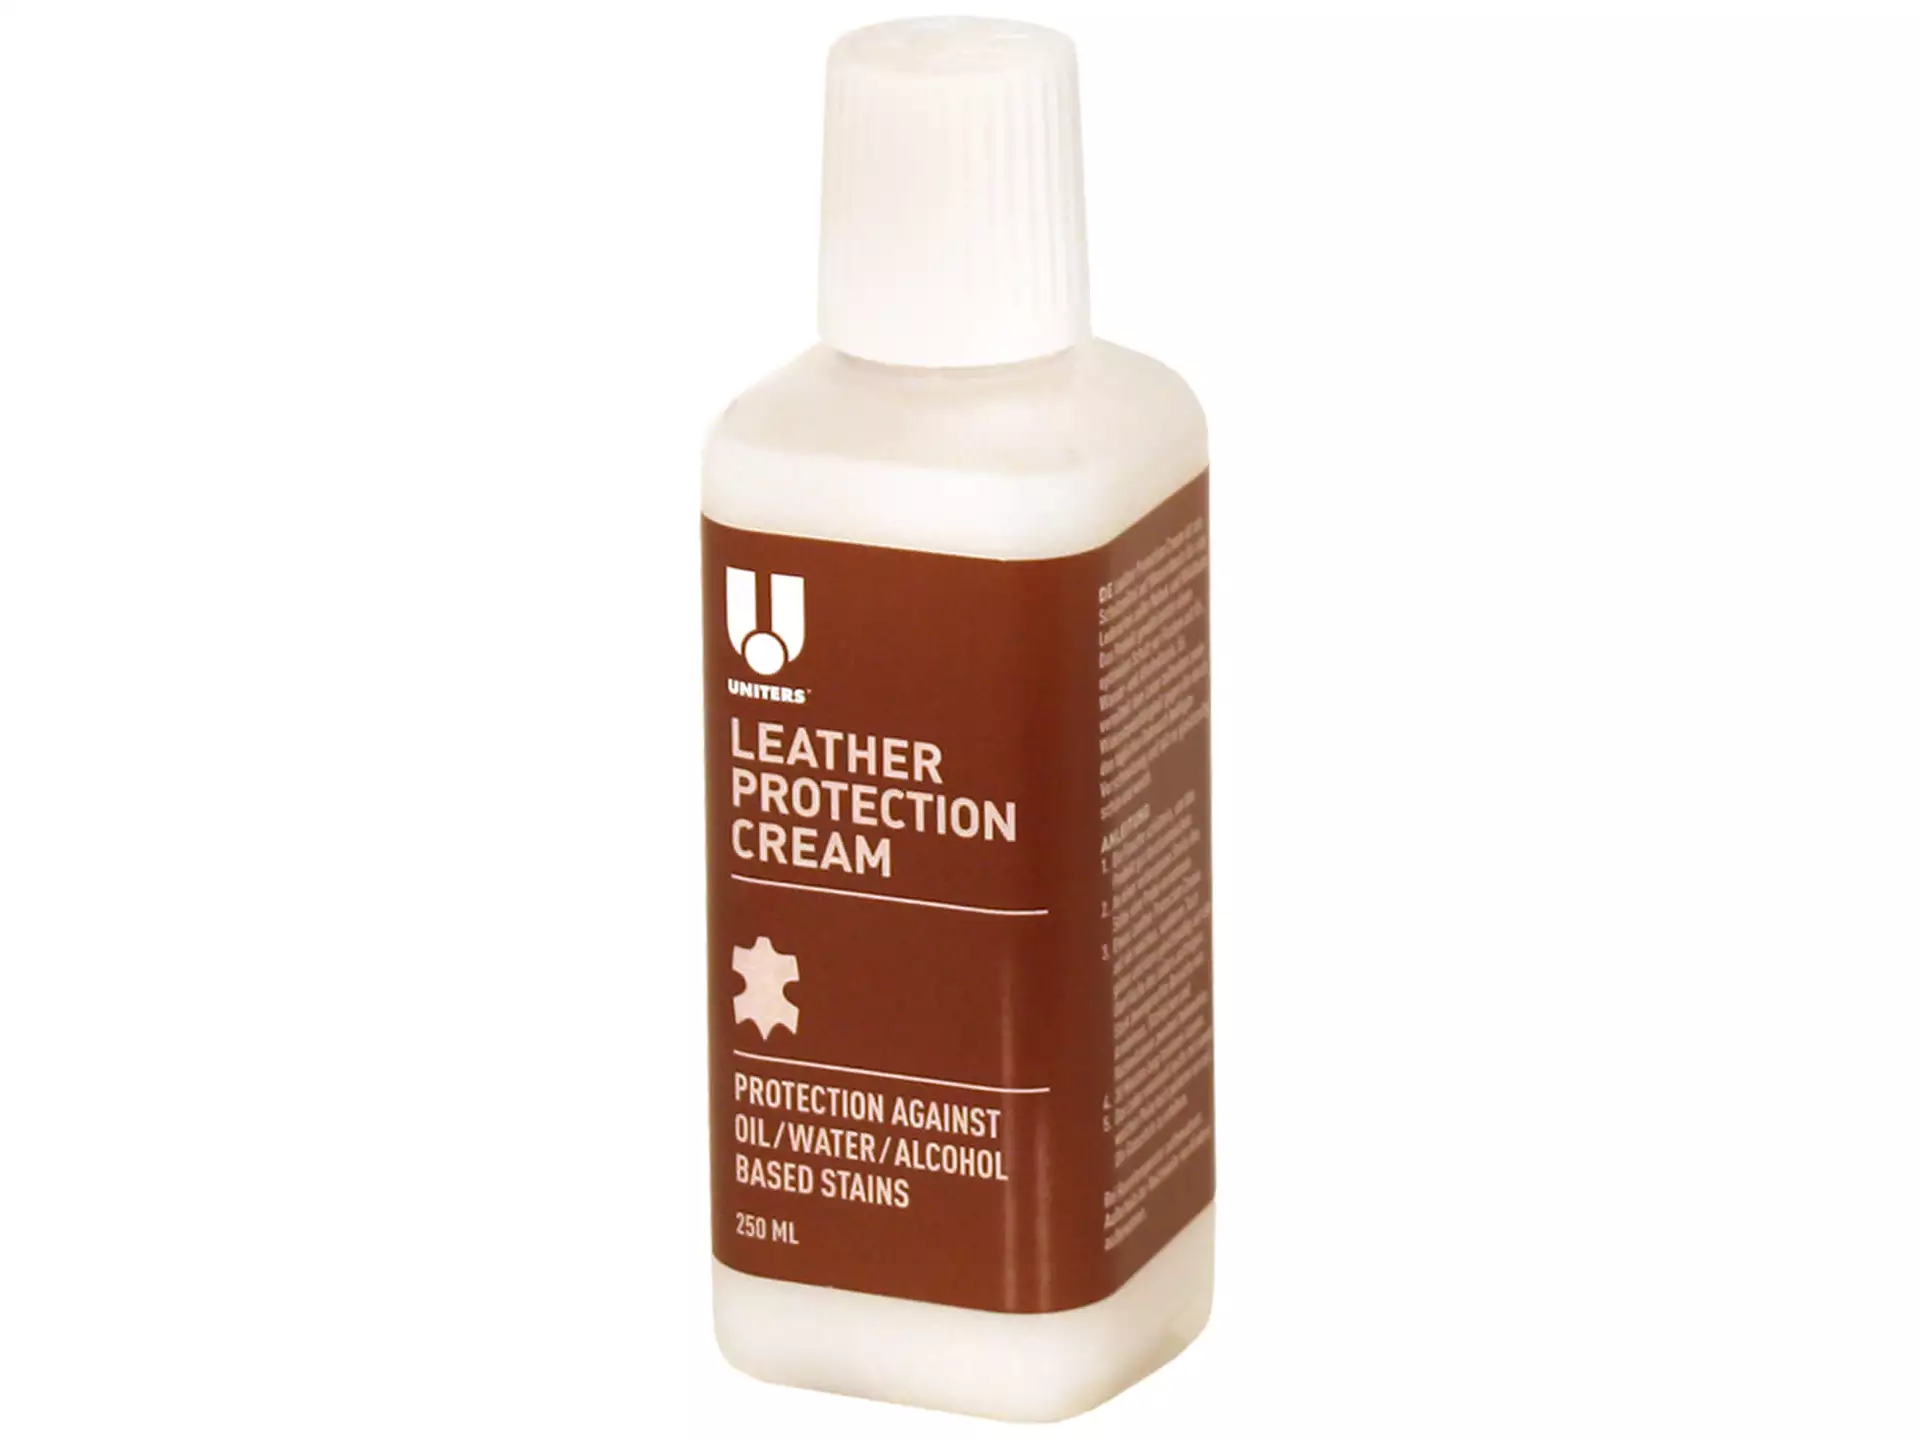 Lederpflegeprodukt Leather Protection Cream